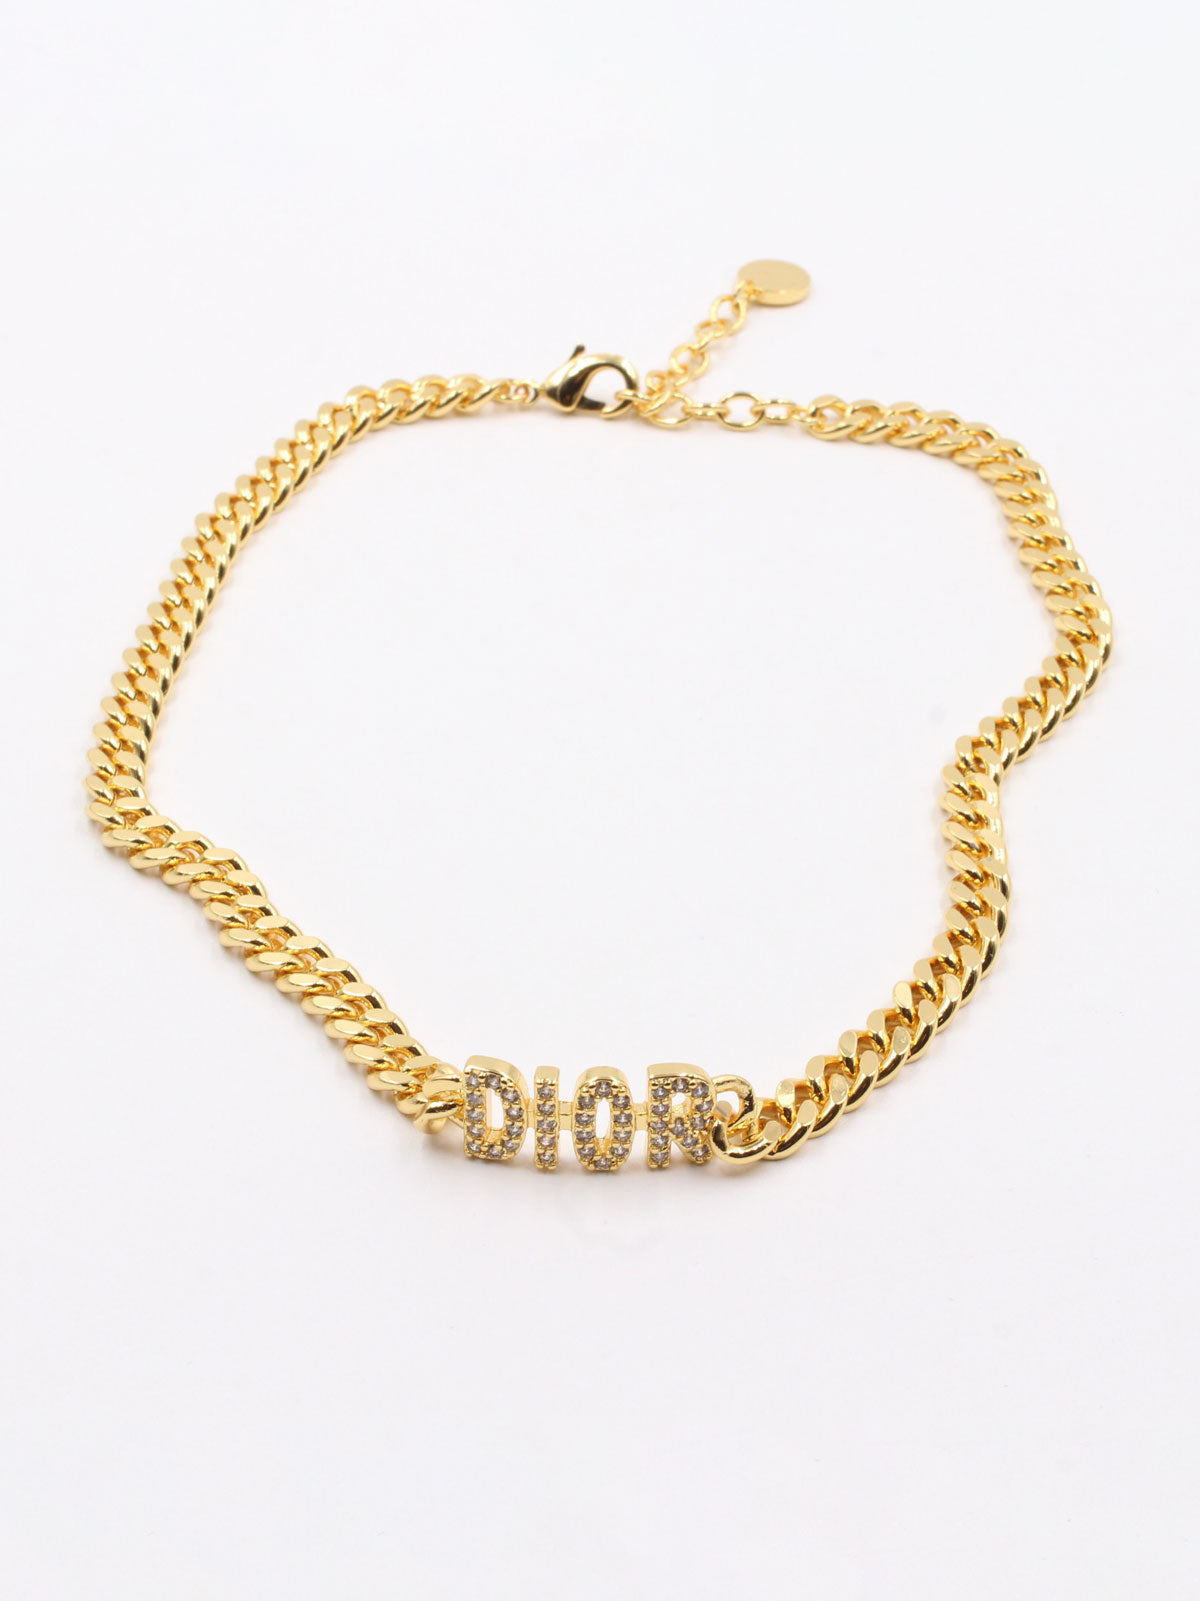 Dior zircon necklace - سلسال ديور زركون سلسال Jewel  